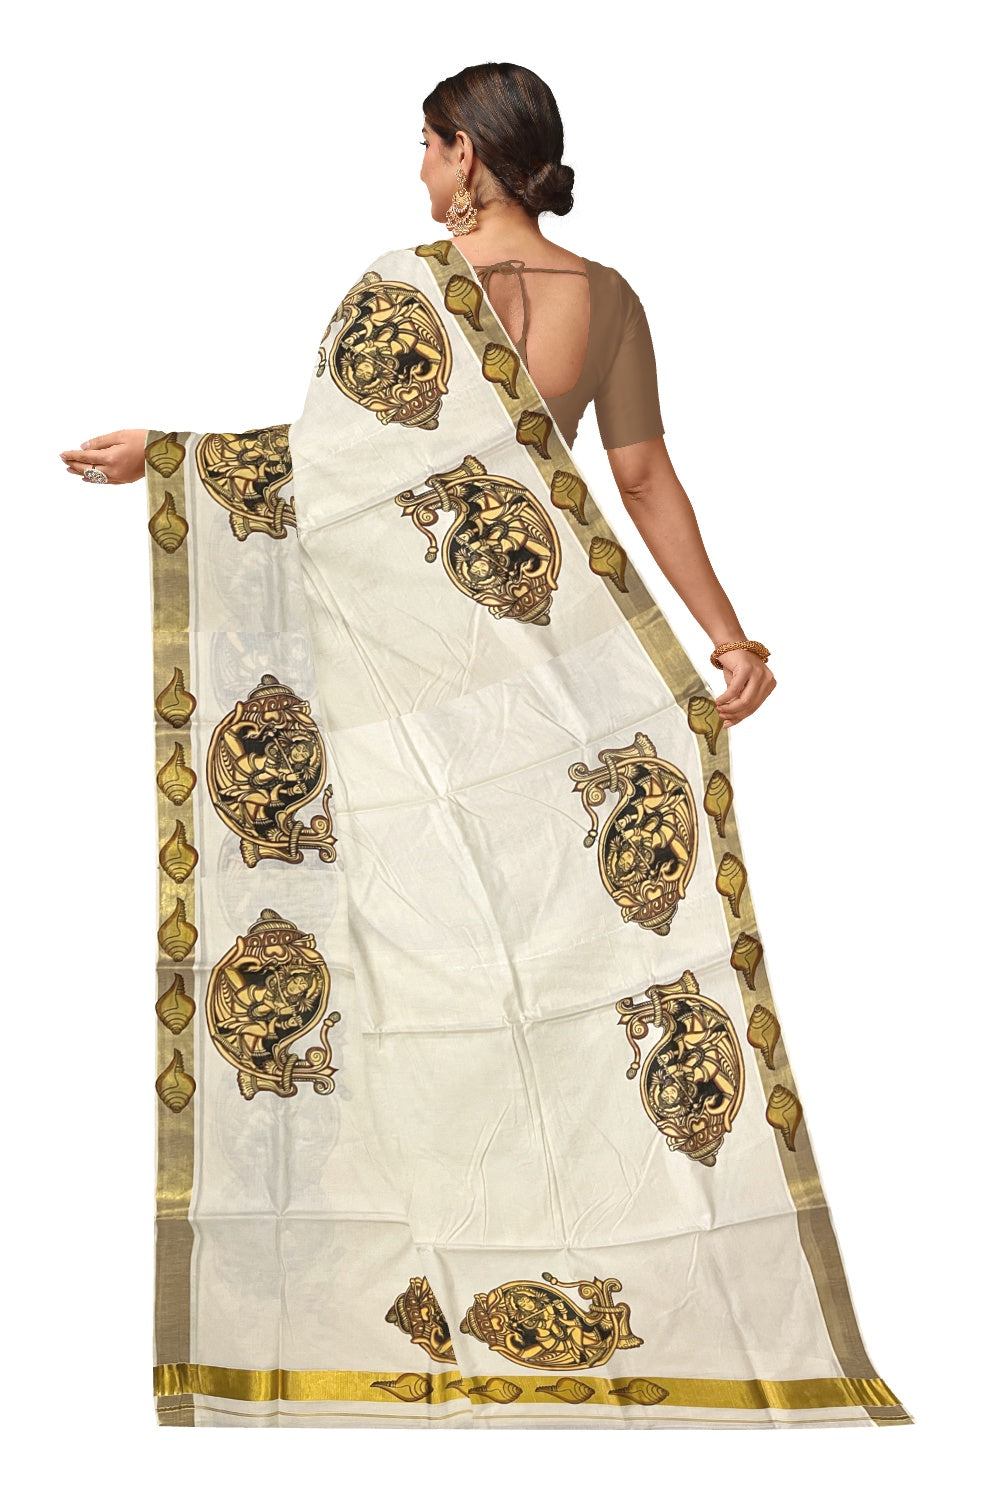 Kerala Pure Cotton Saree with Krishna and Shell Mural Prints and Printed Kasavu Border